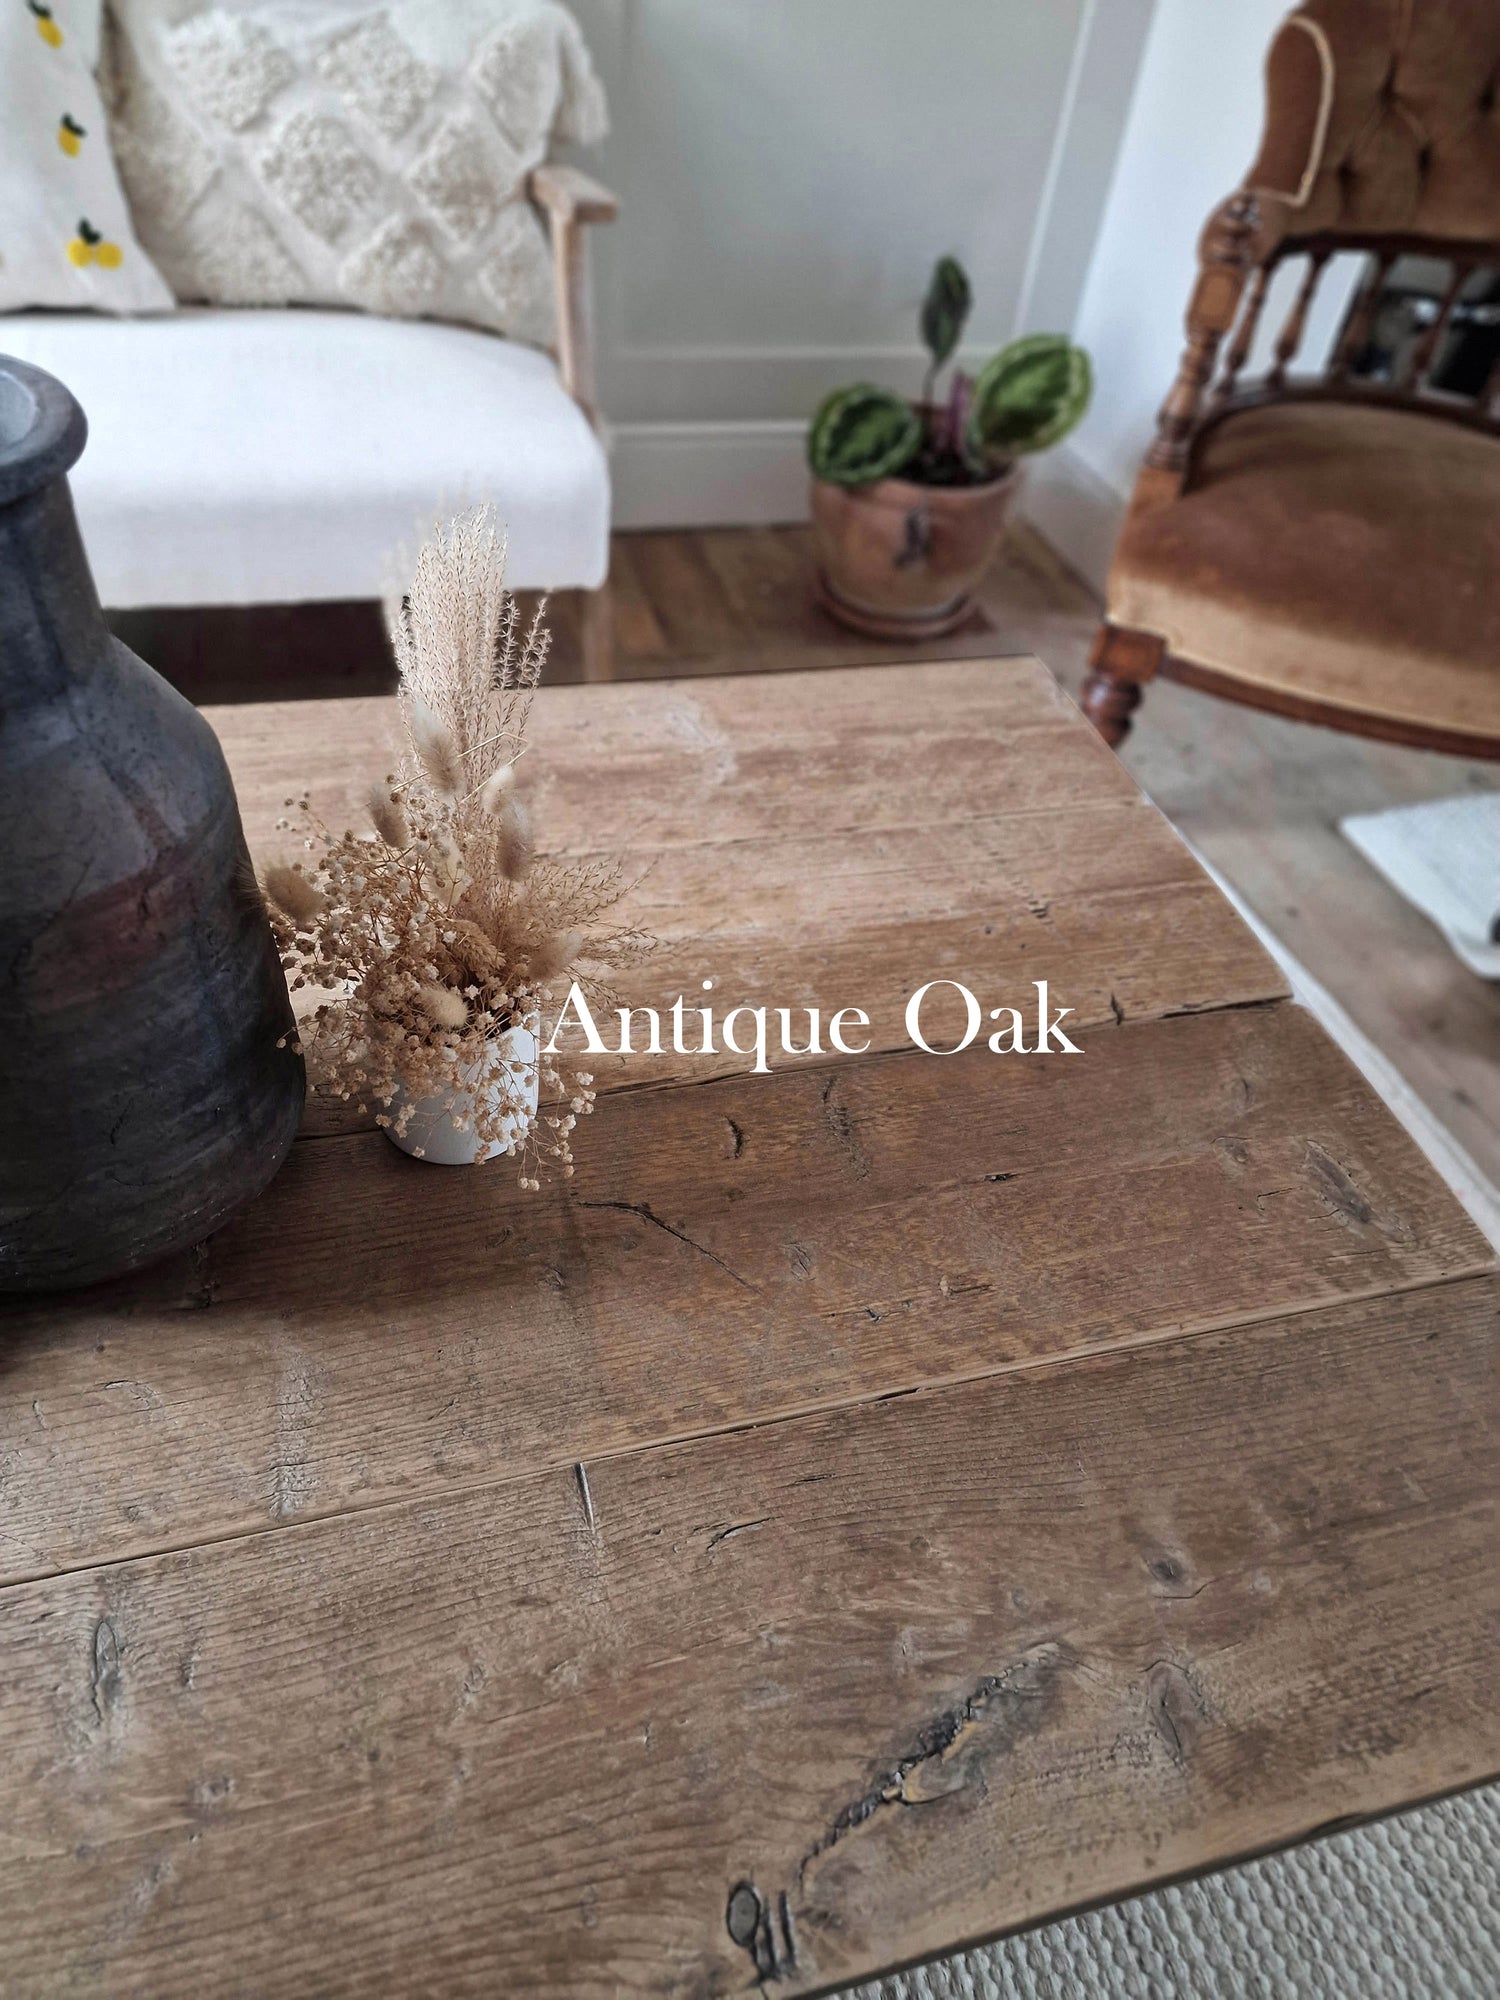 Barn Coffee Table in antique oak finish